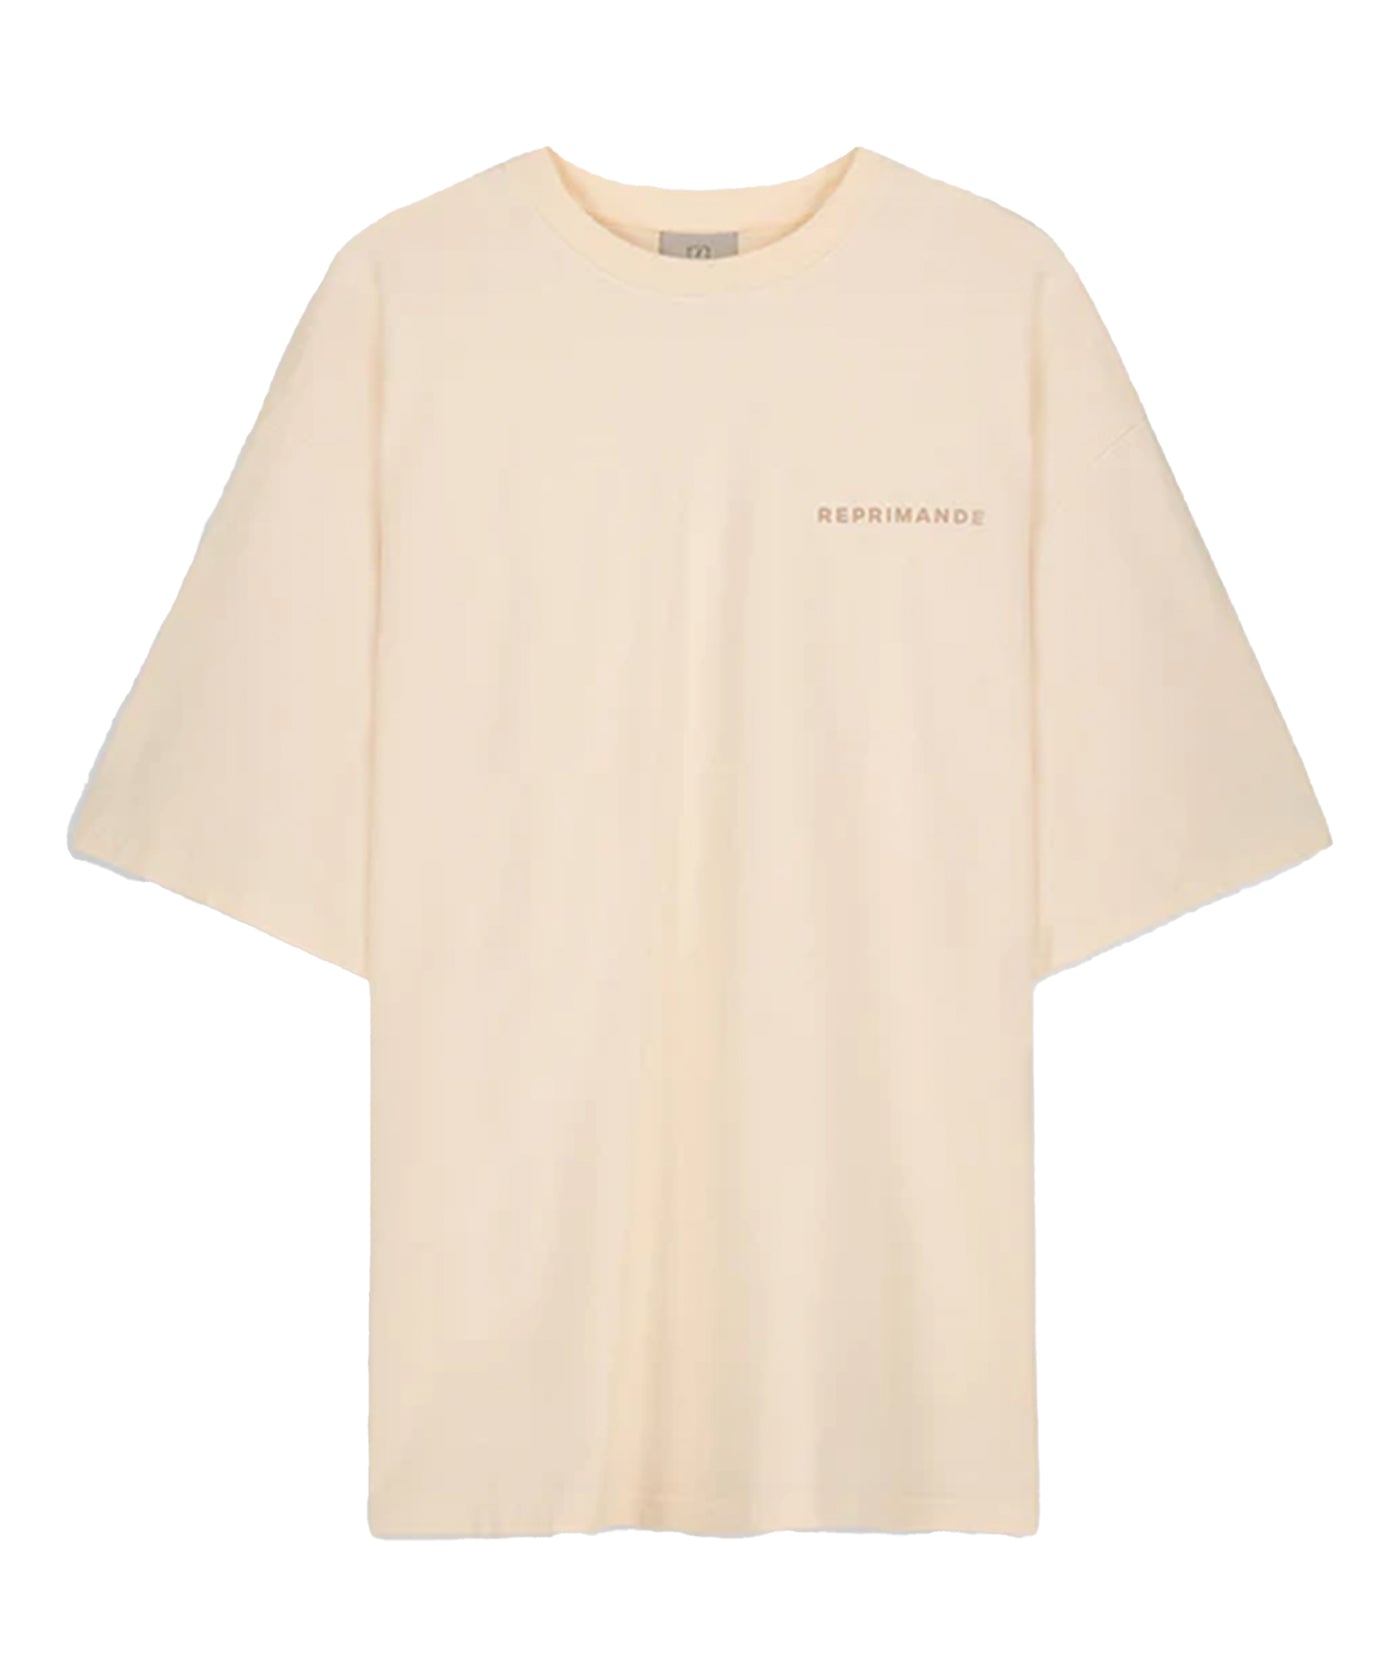 Reprimande - Classic - T-shirt - Buttercream